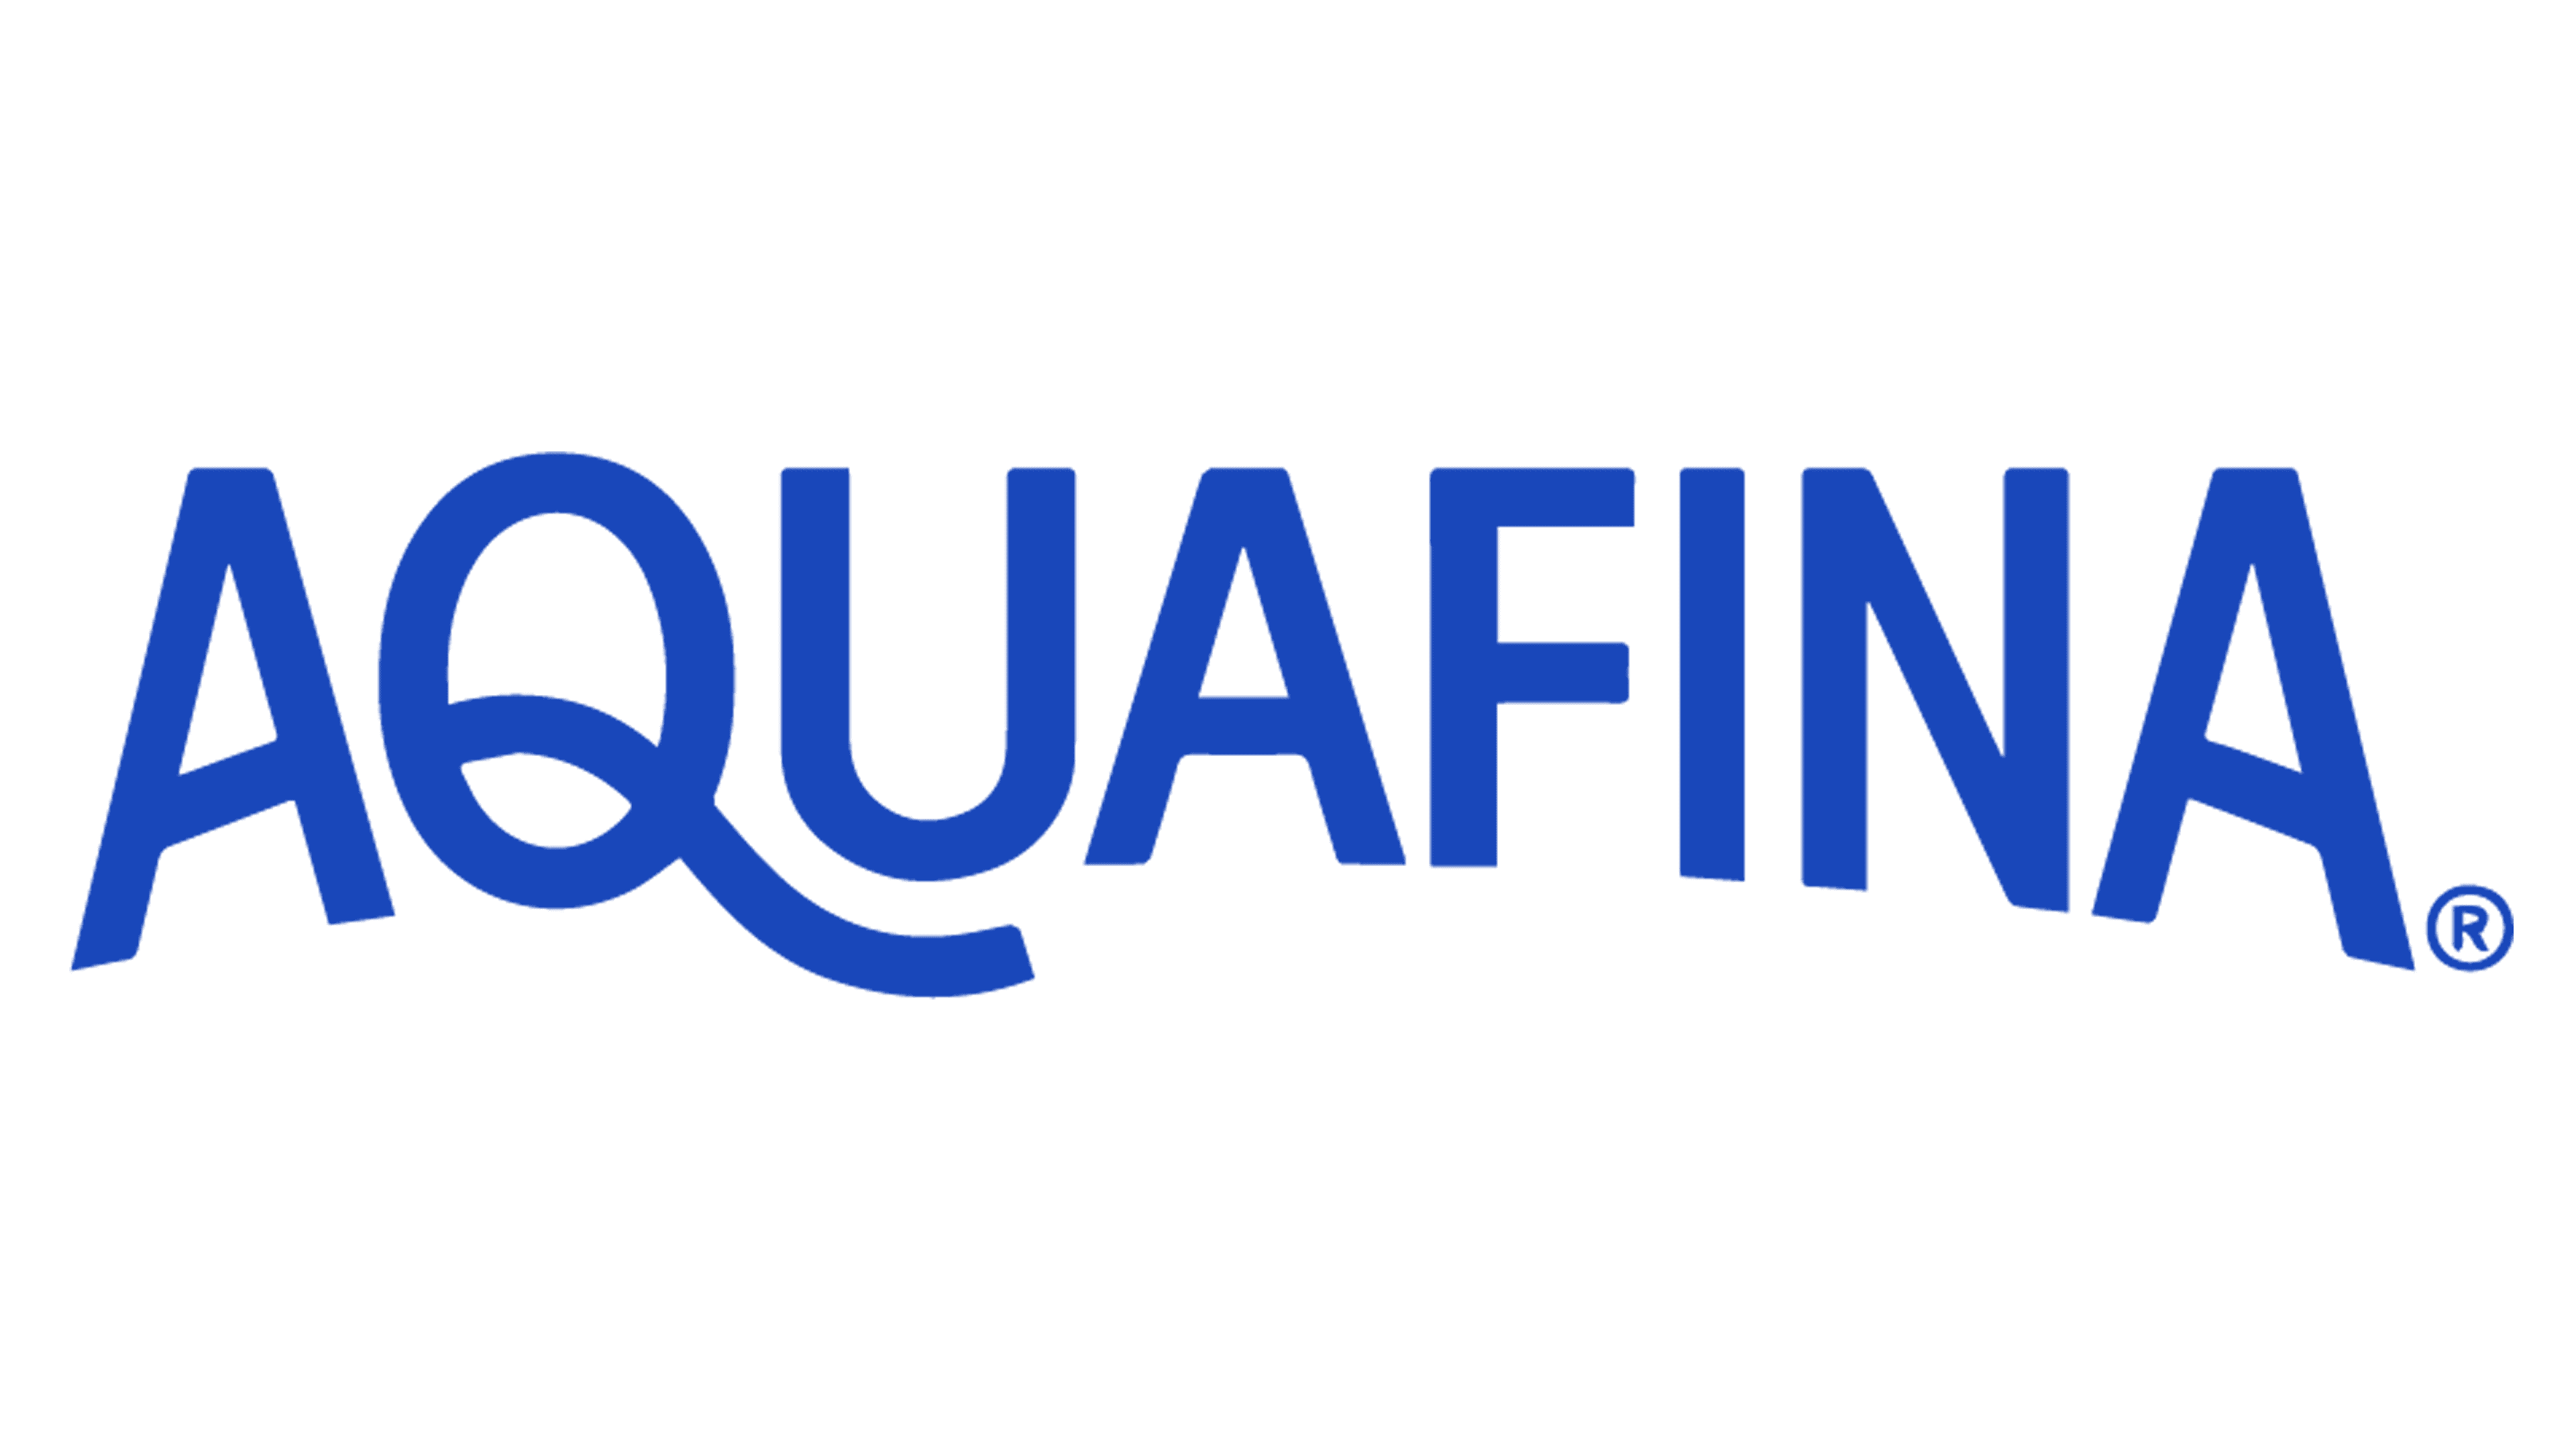 Aquafina Transparent Logo PNG